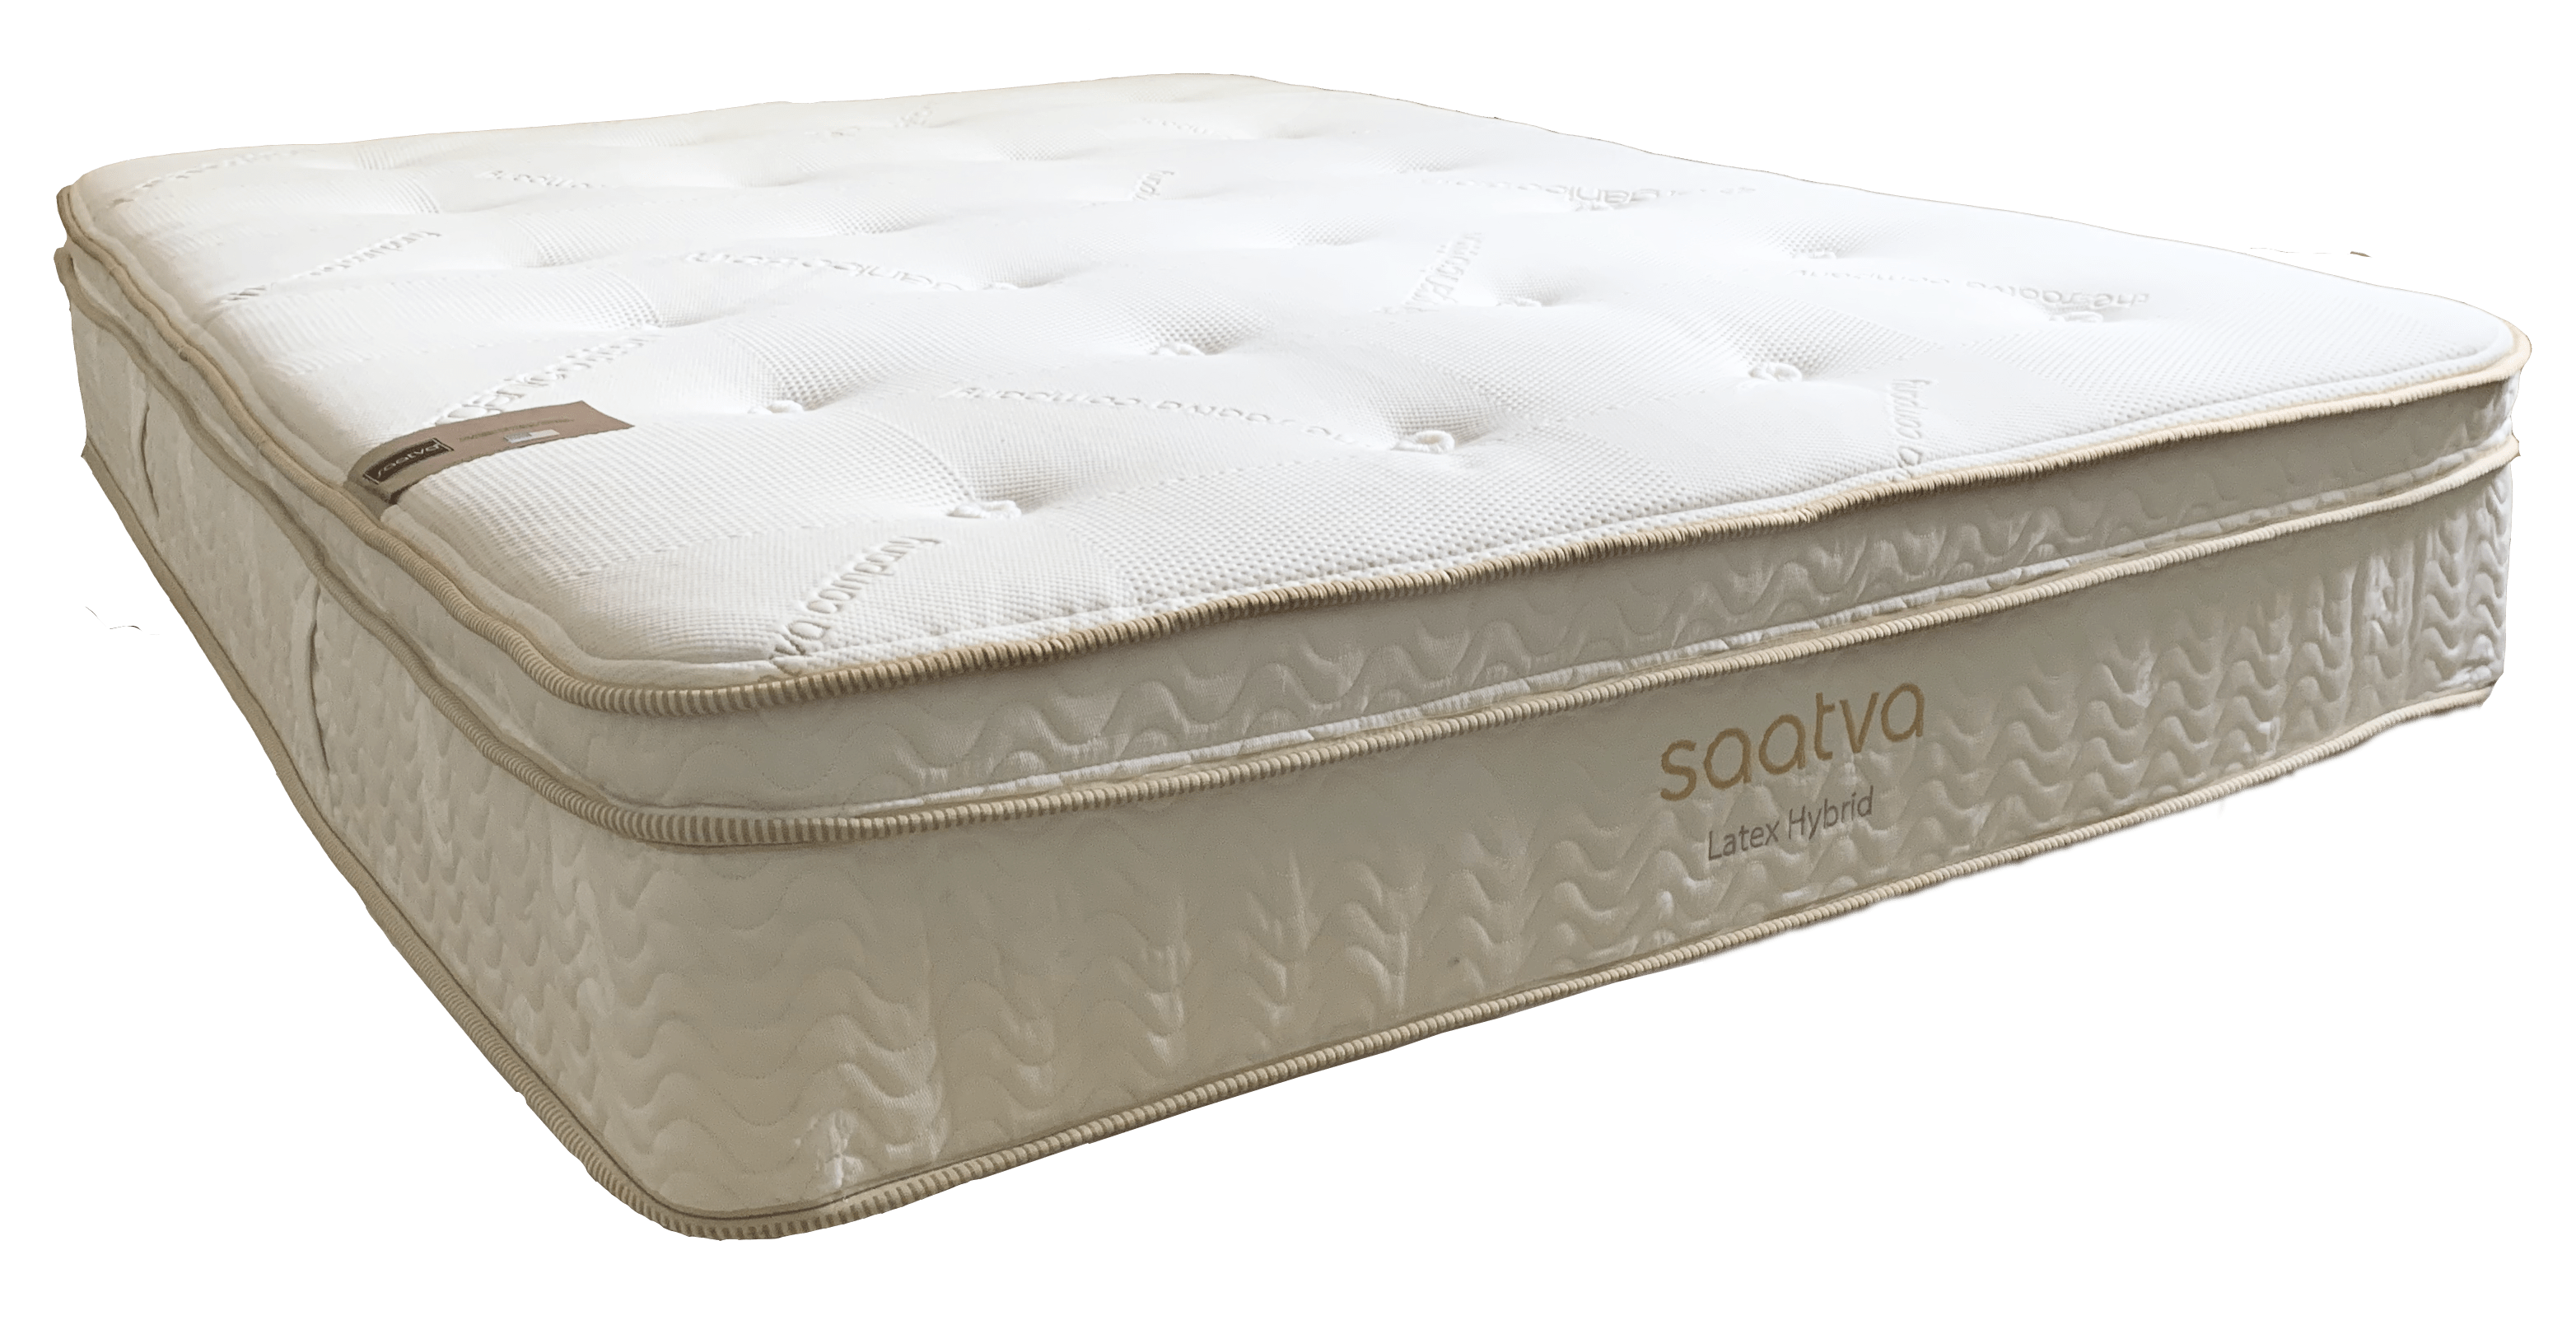 is saatva a hybrid mattress